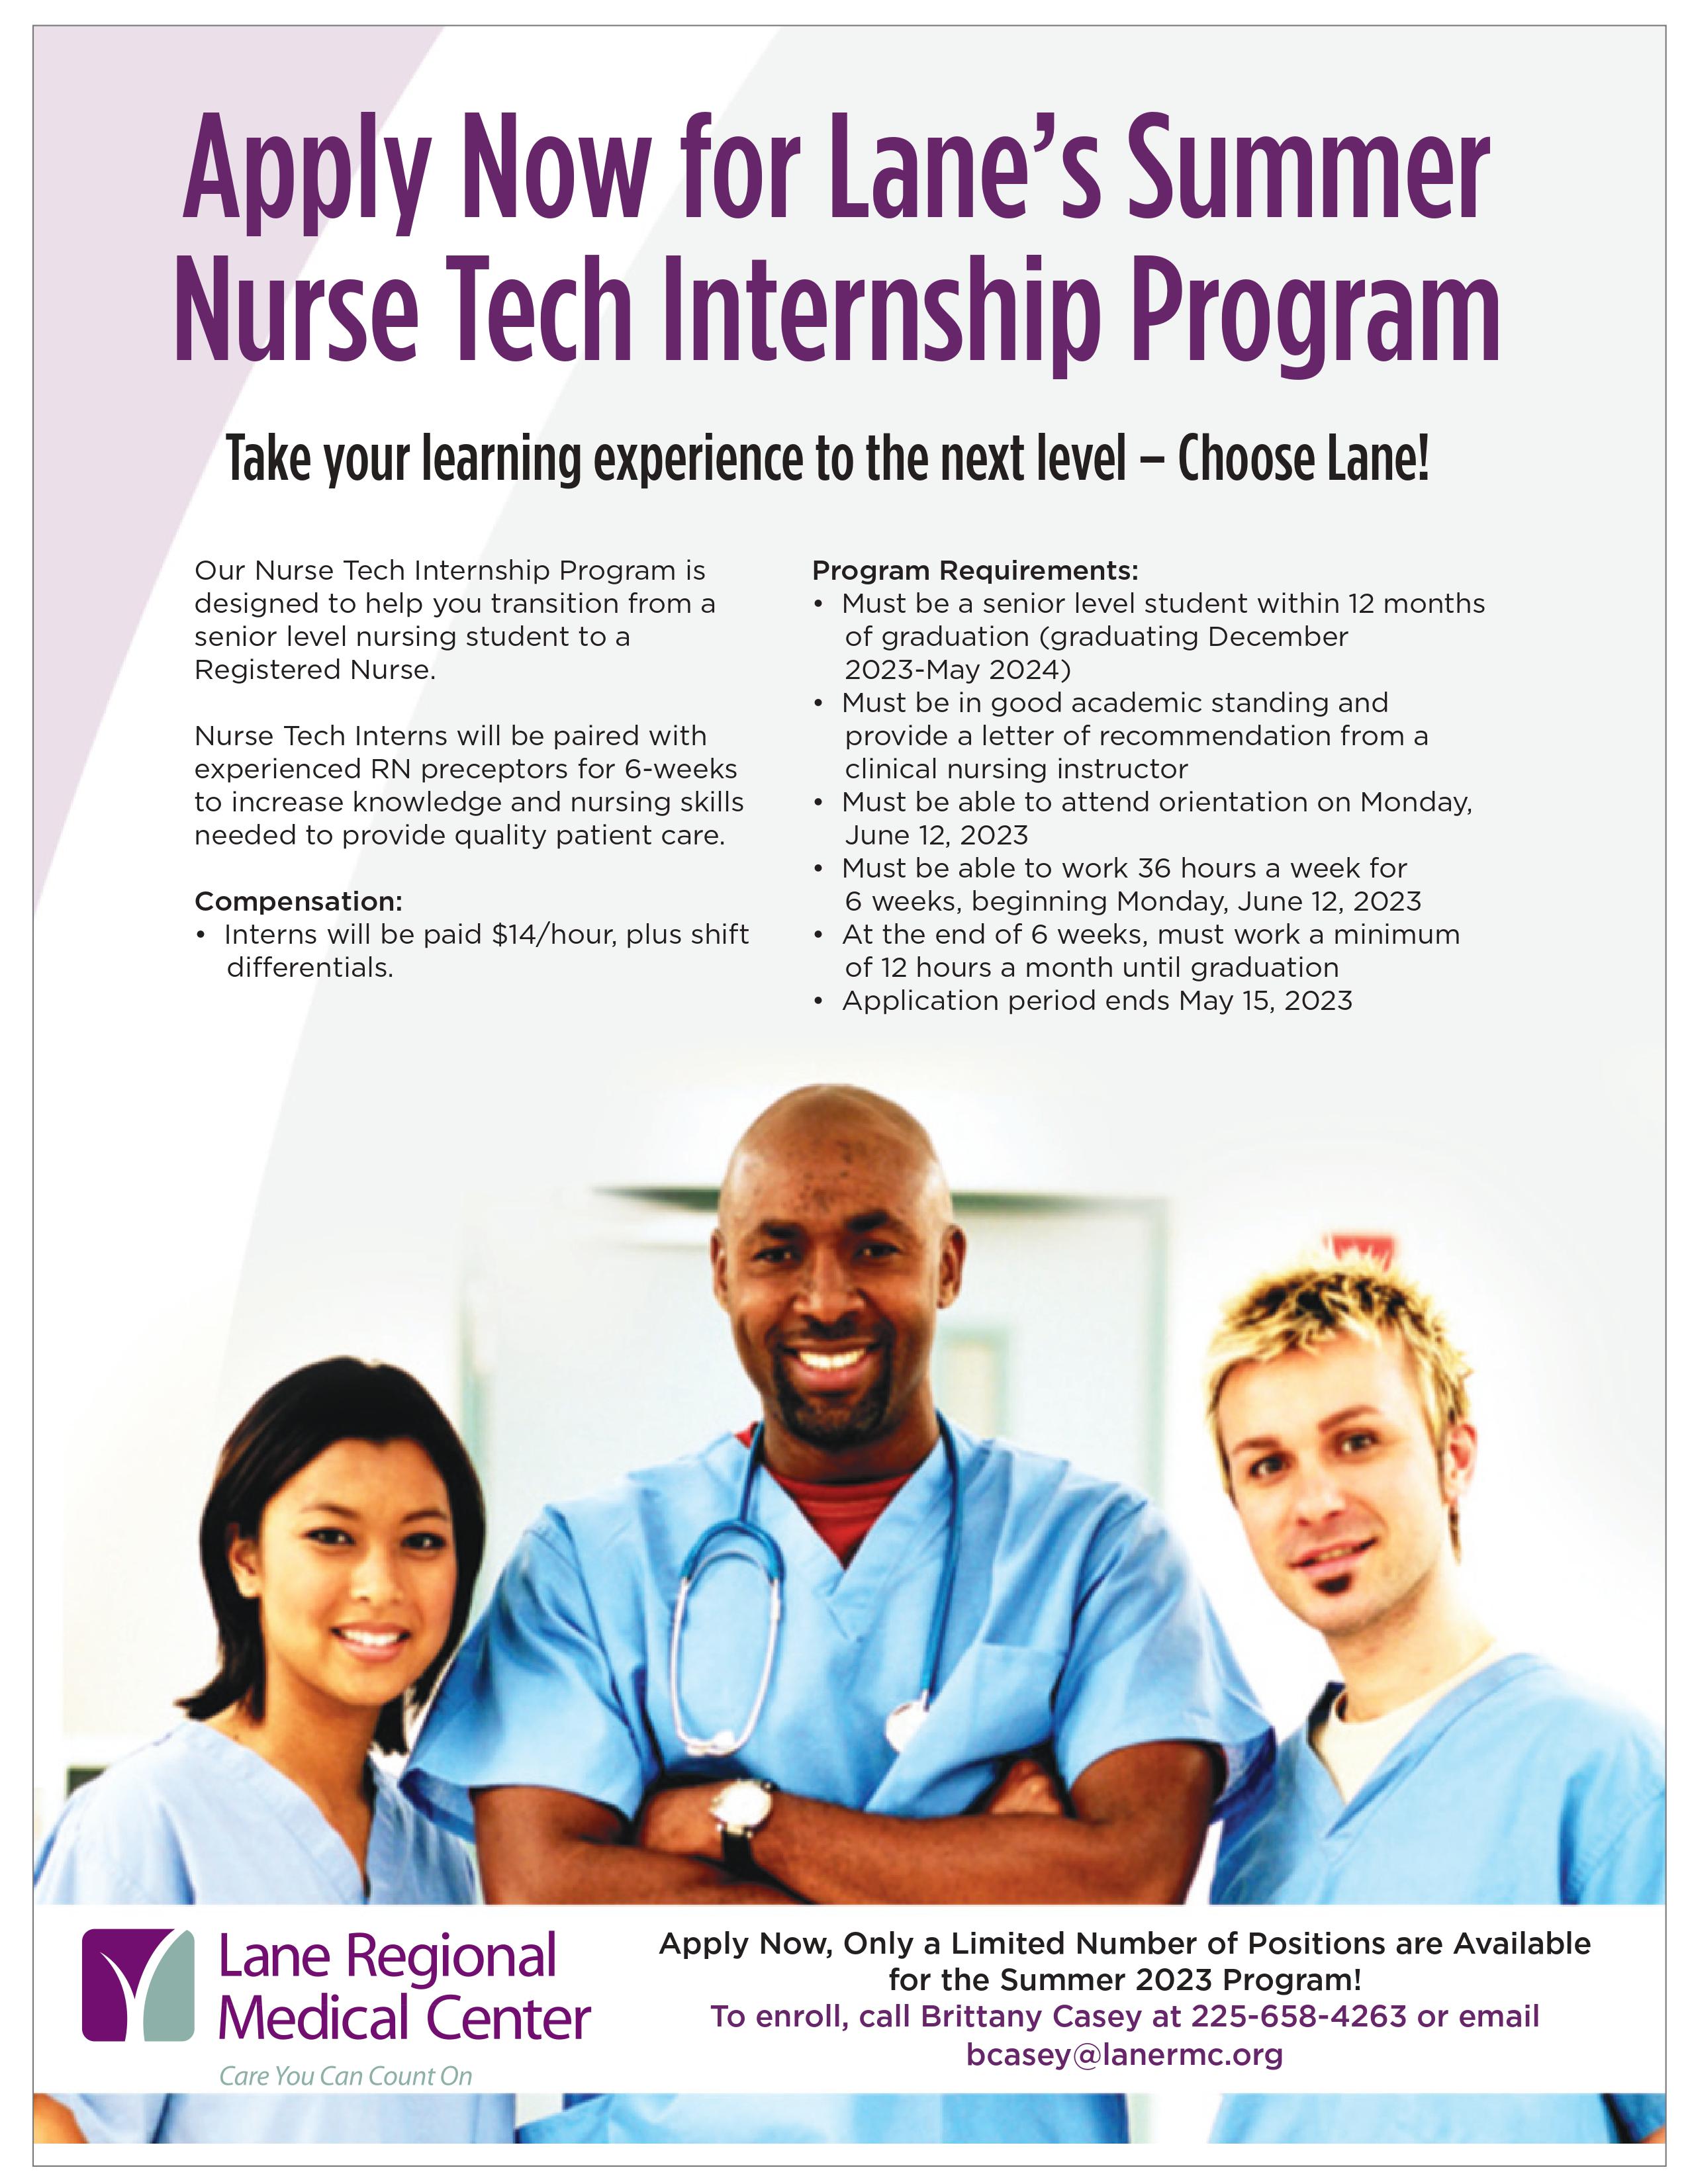 Apply Now for Lane’s Summer Nurse Tech Internship Program